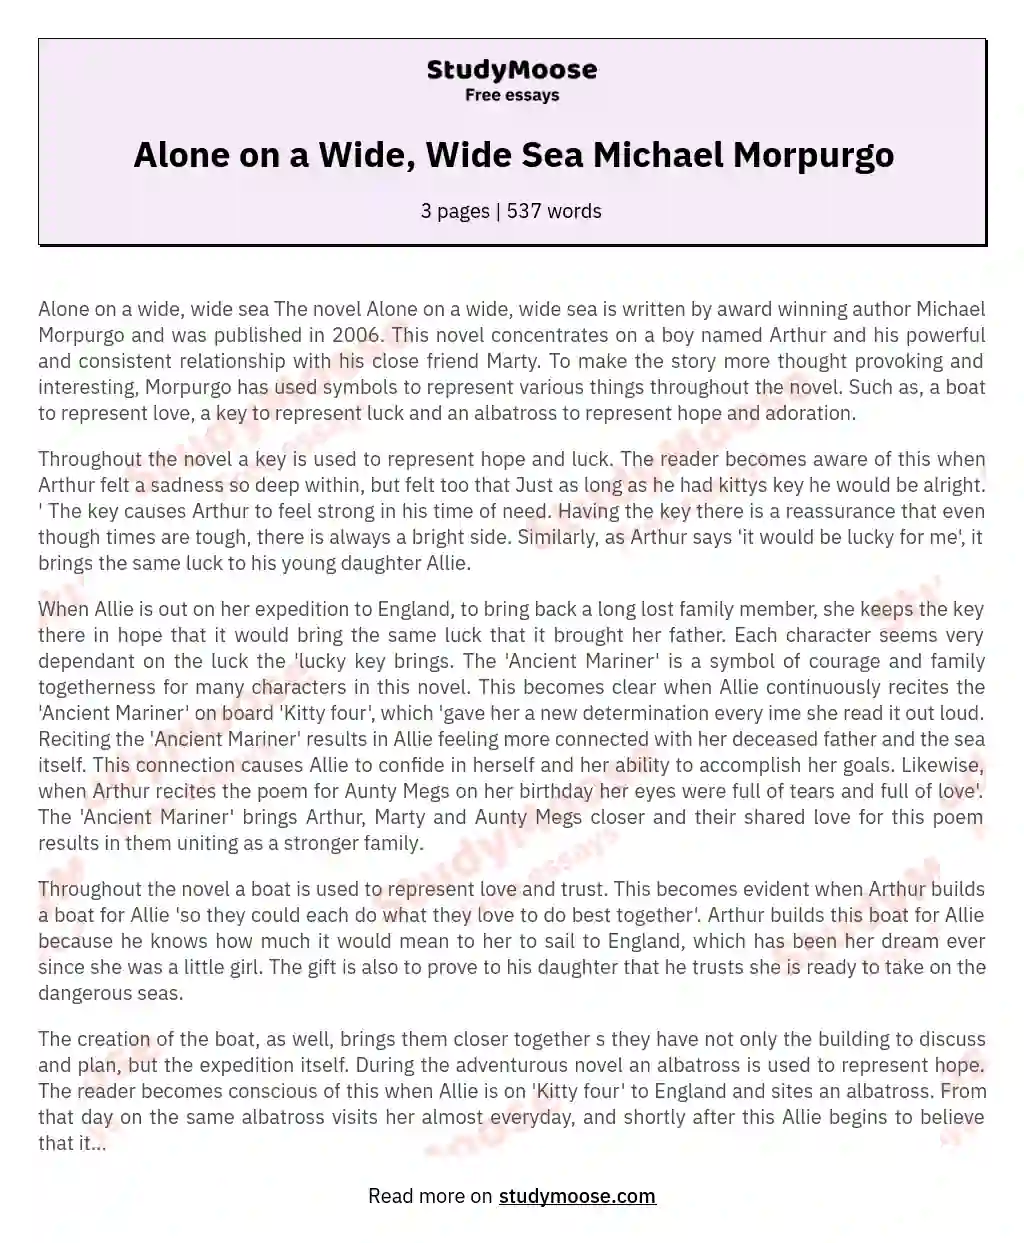 Alone on a Wide, Wide Sea Michael Morpurgo